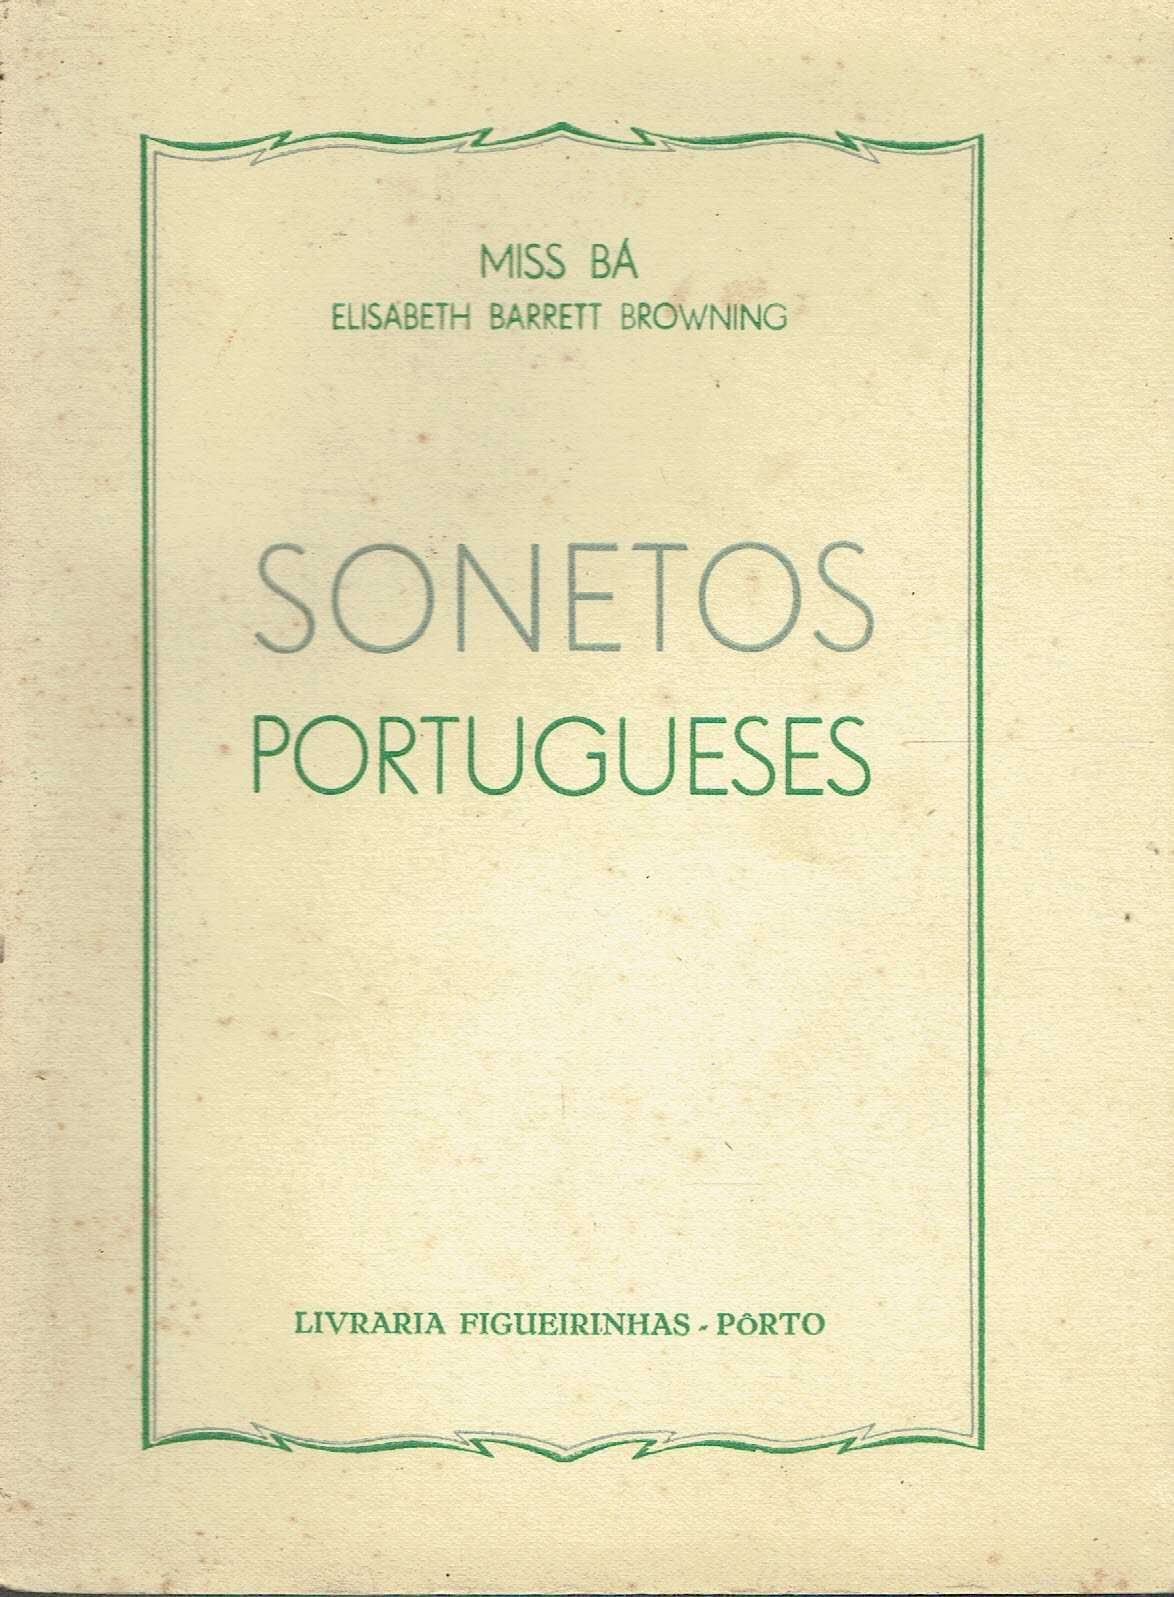 14989

SONETOS PORTUGUESES", 
de Miss Bá - Elisabeth Barret Browning